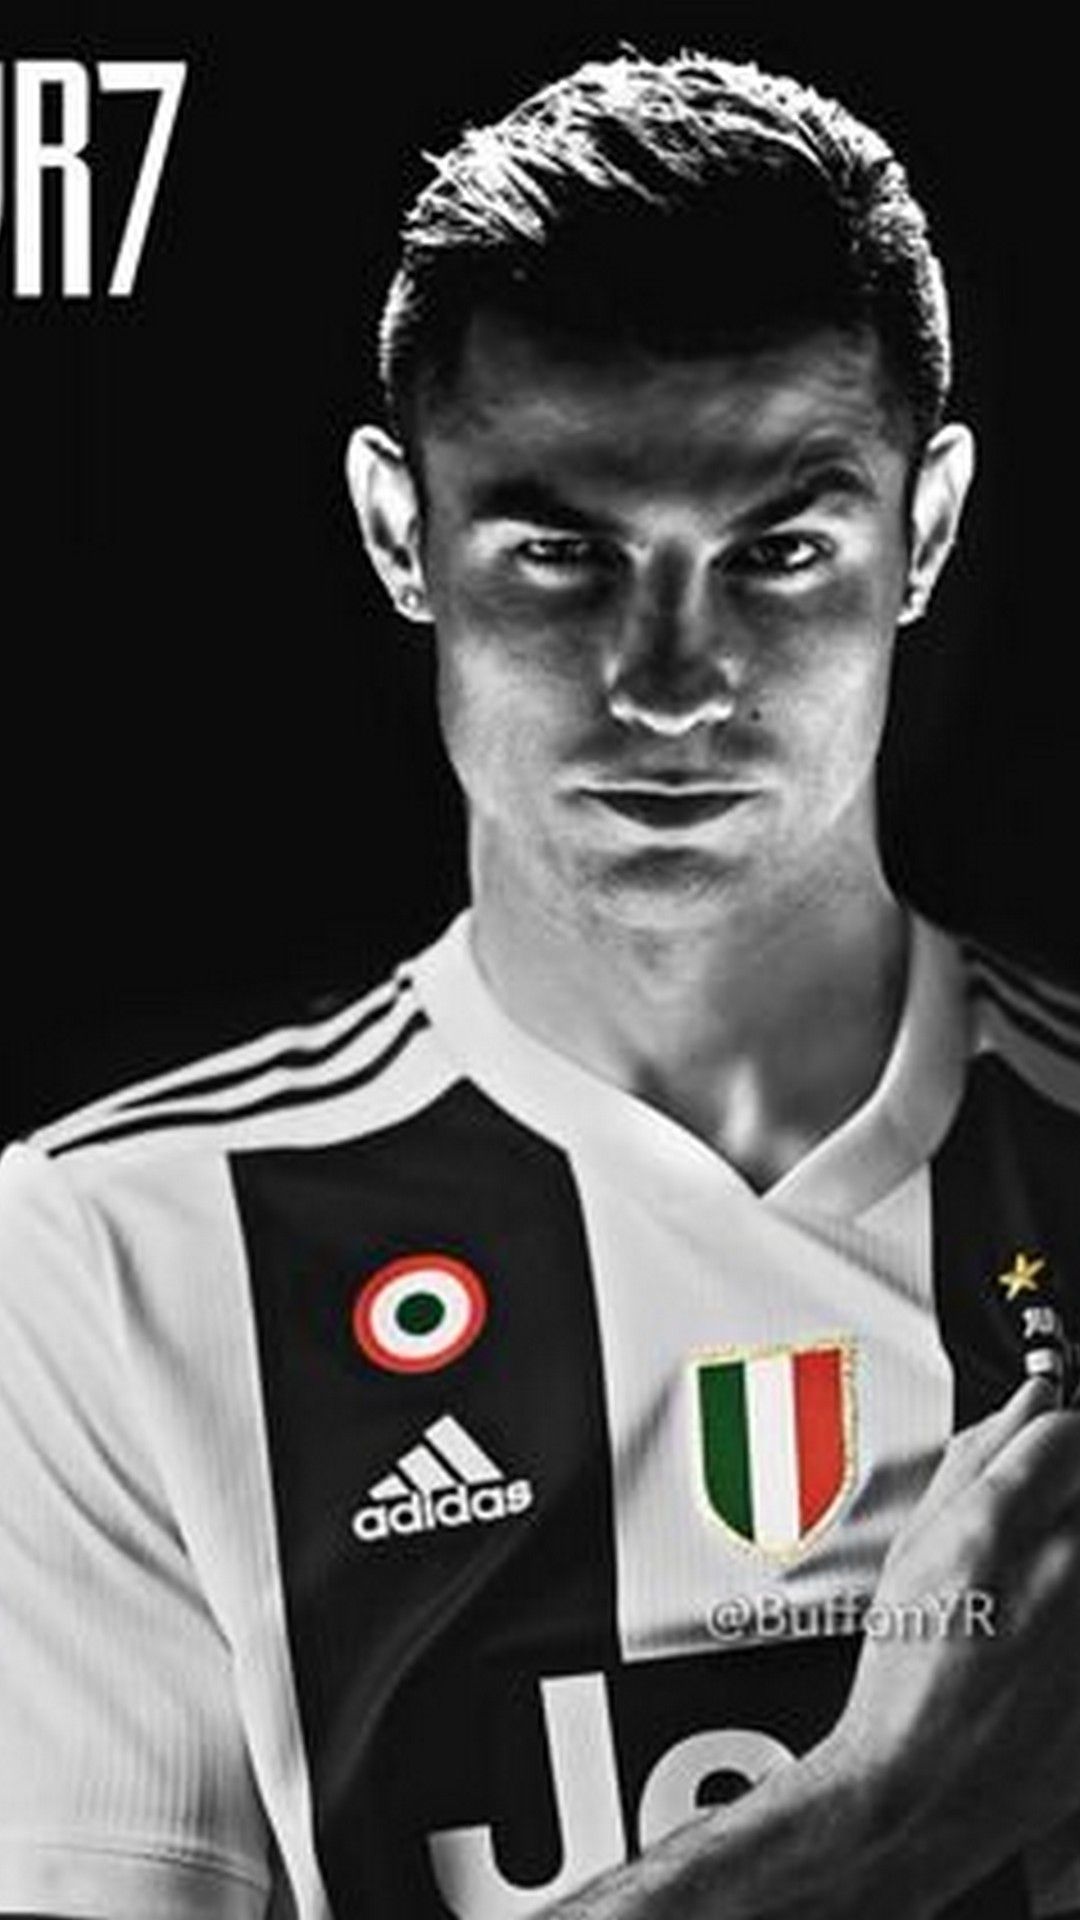 Free download Cristiano Ronaldo Juventus Wallpaper Android 2020